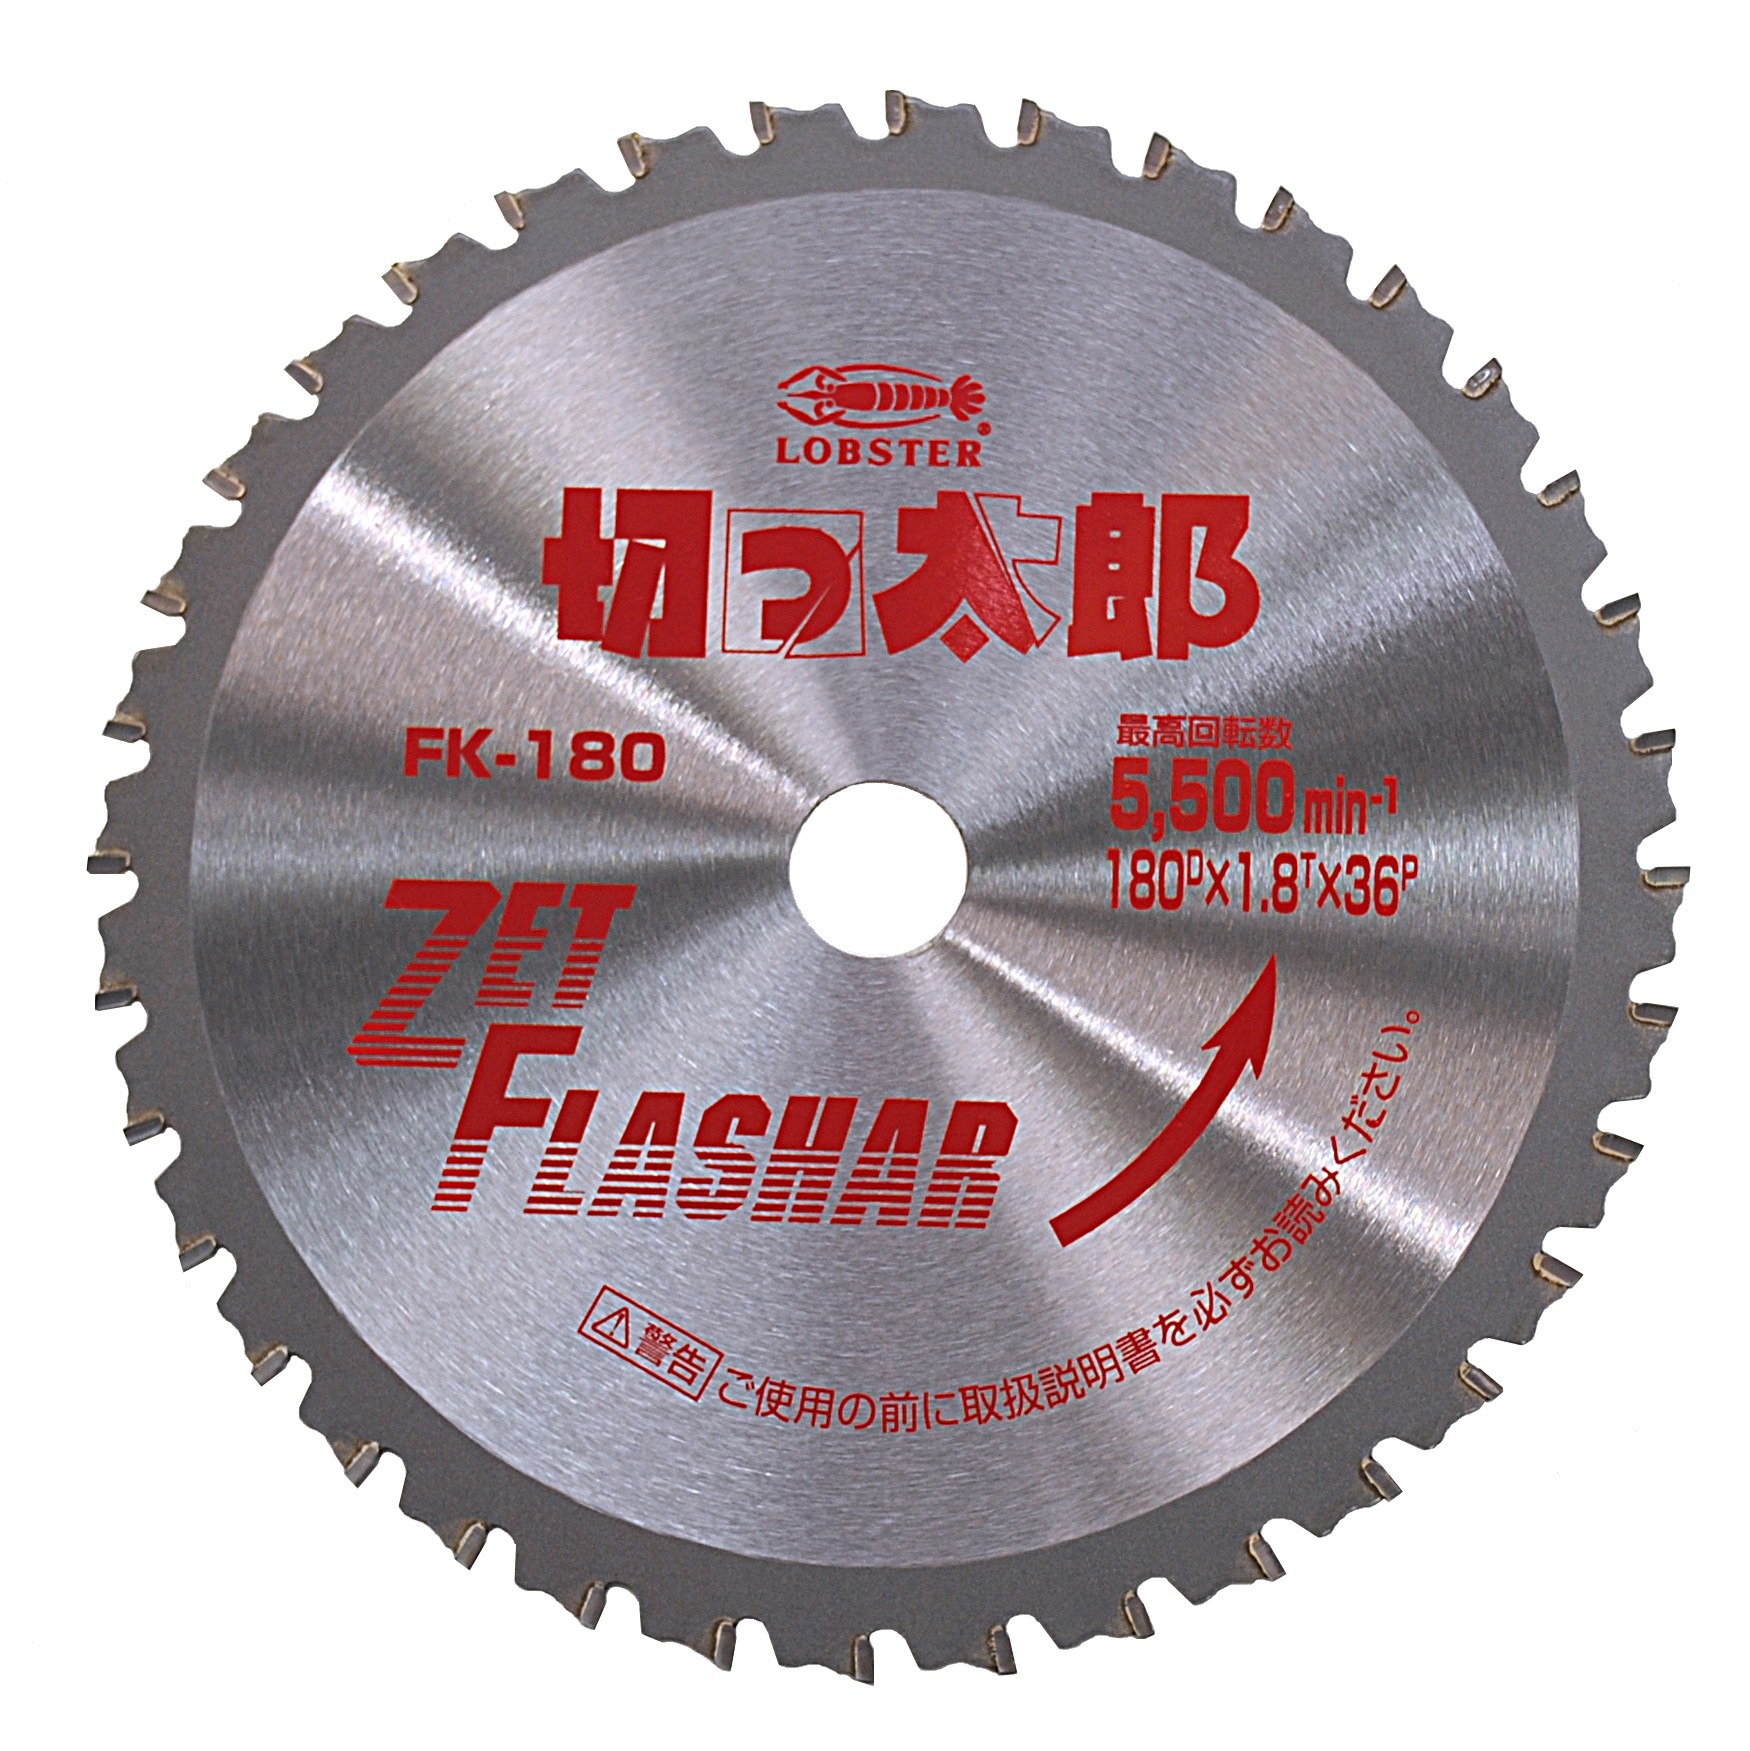 Zet flashar for ironworking 